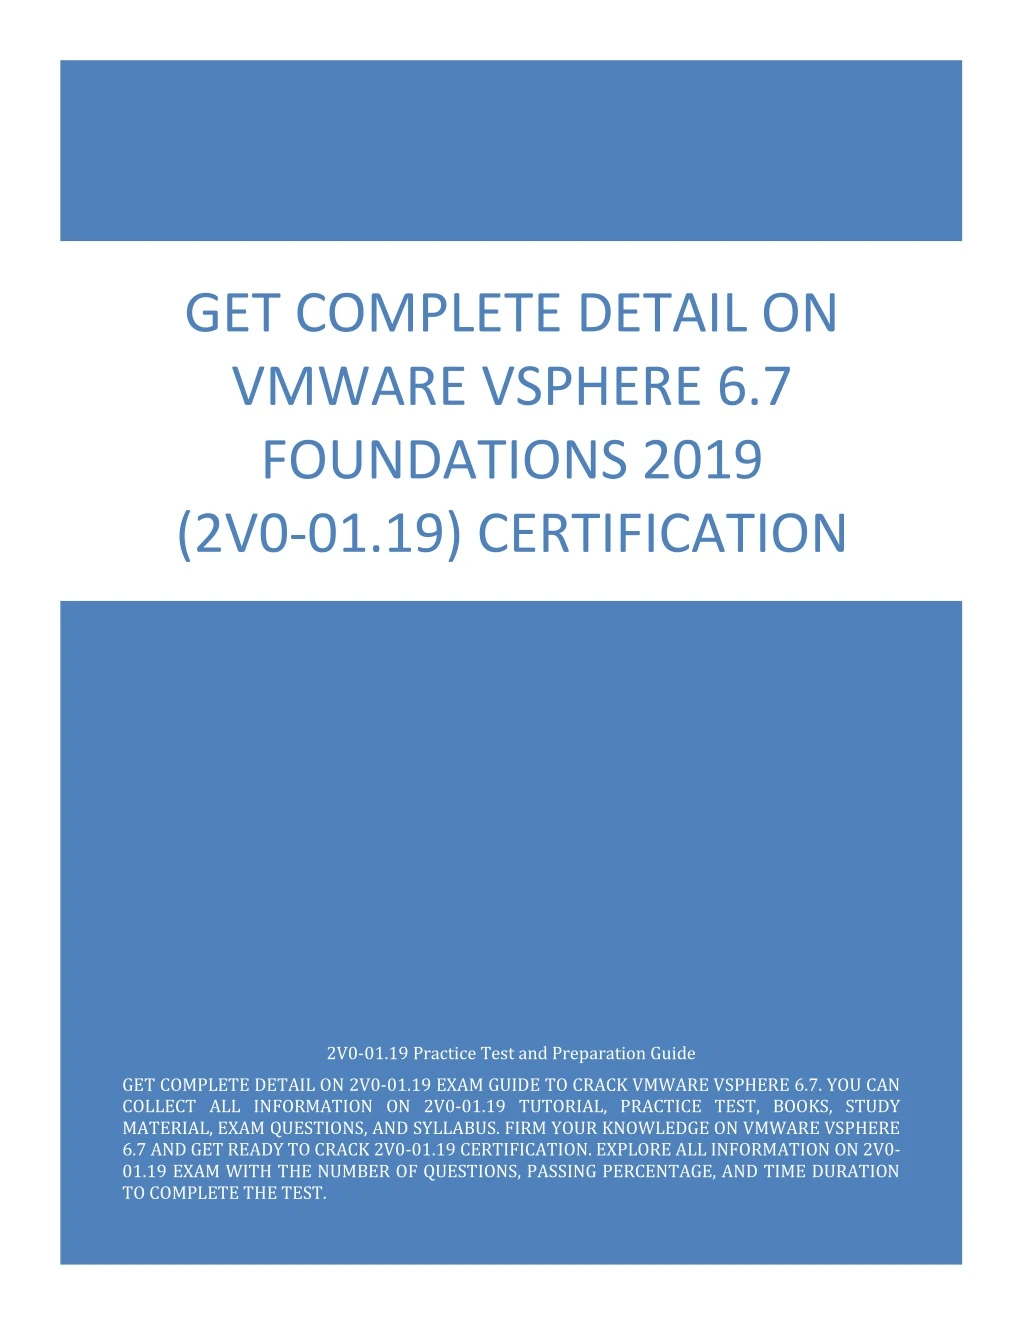 get complete detail on vmware vsphere